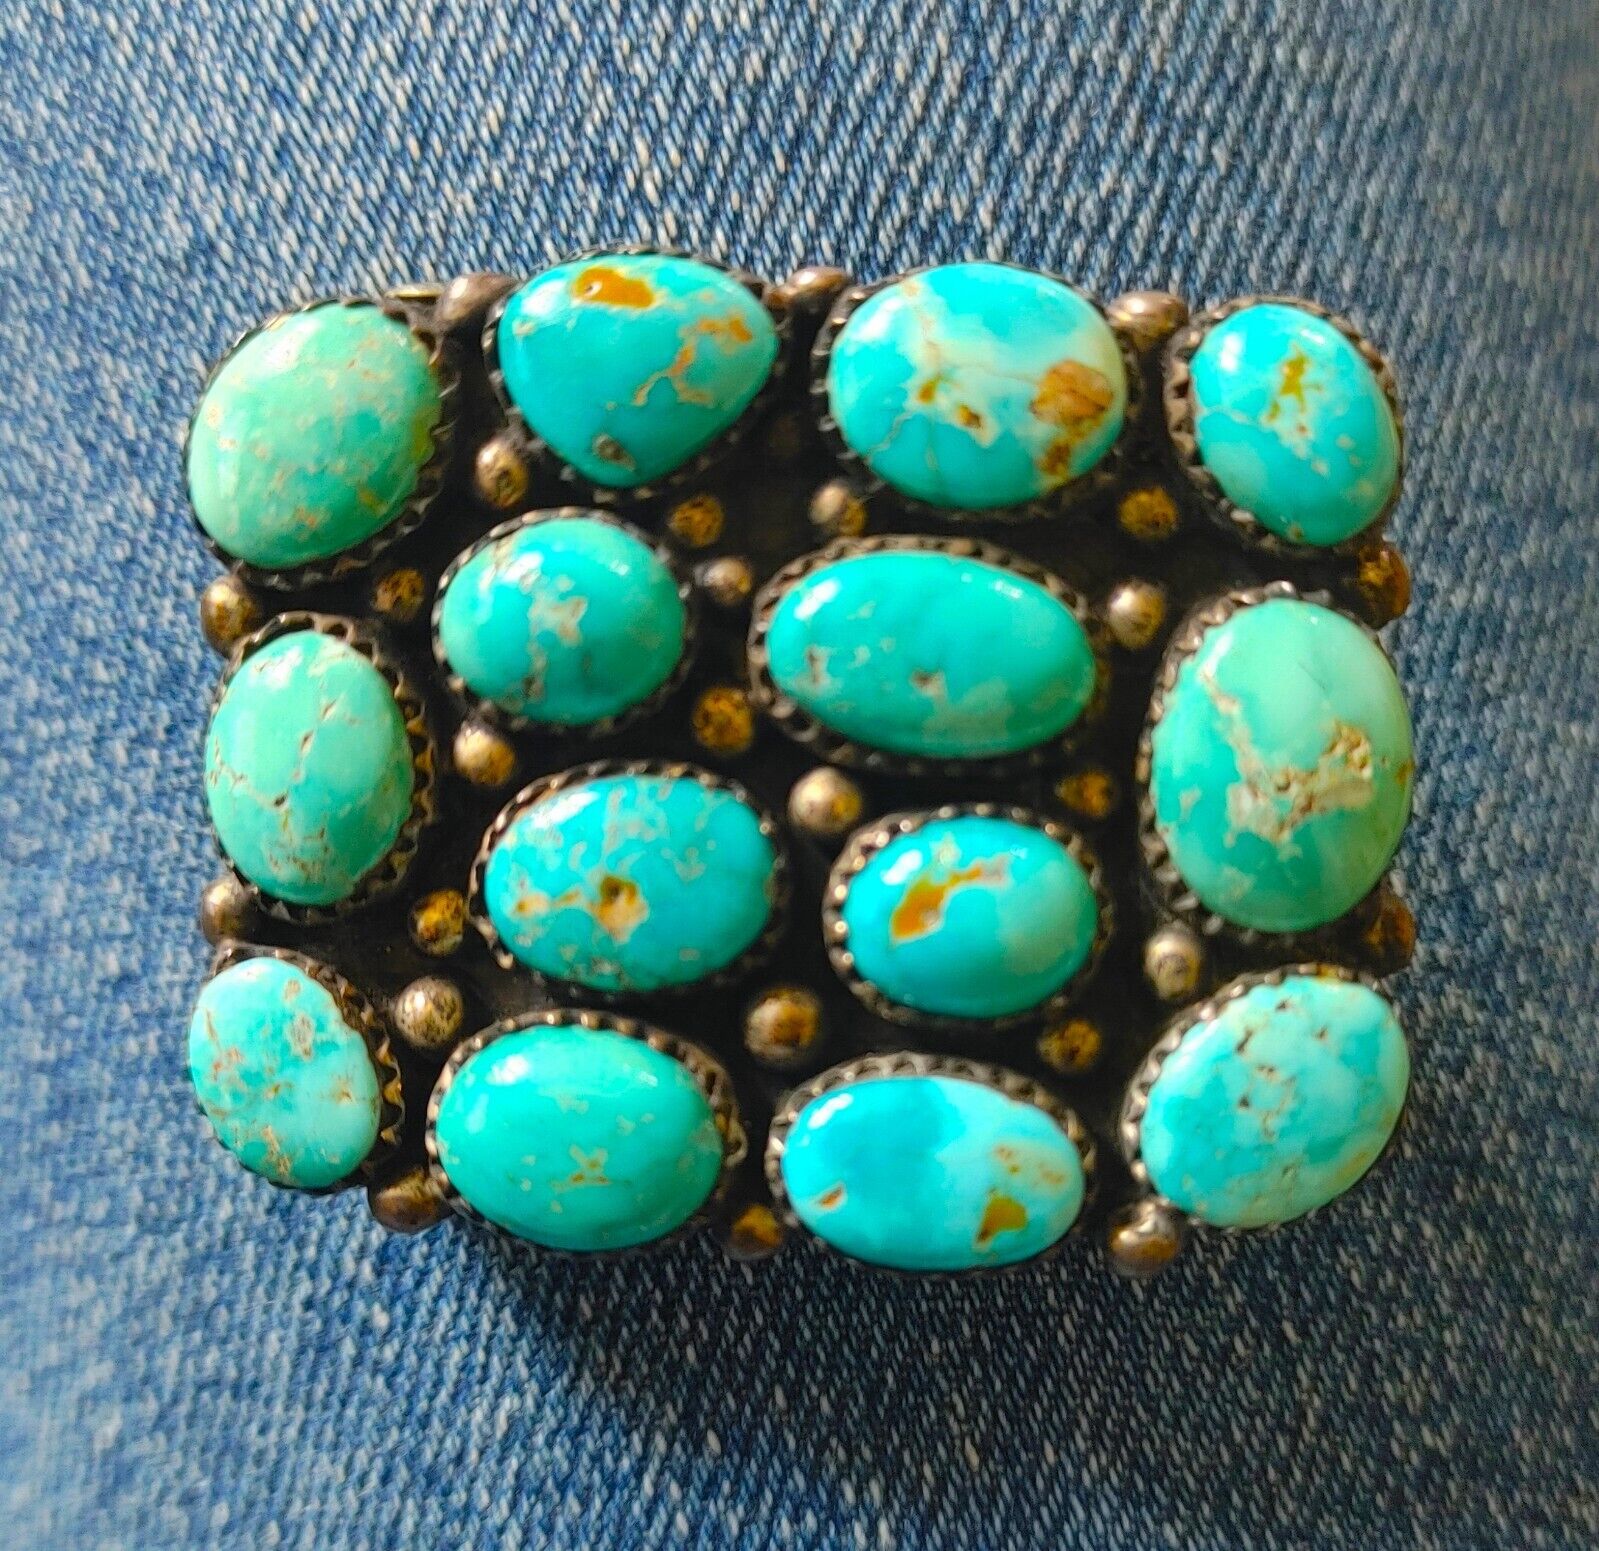 Vintage Navajo belt buckle sterling silver turquoise cluster 14 stones